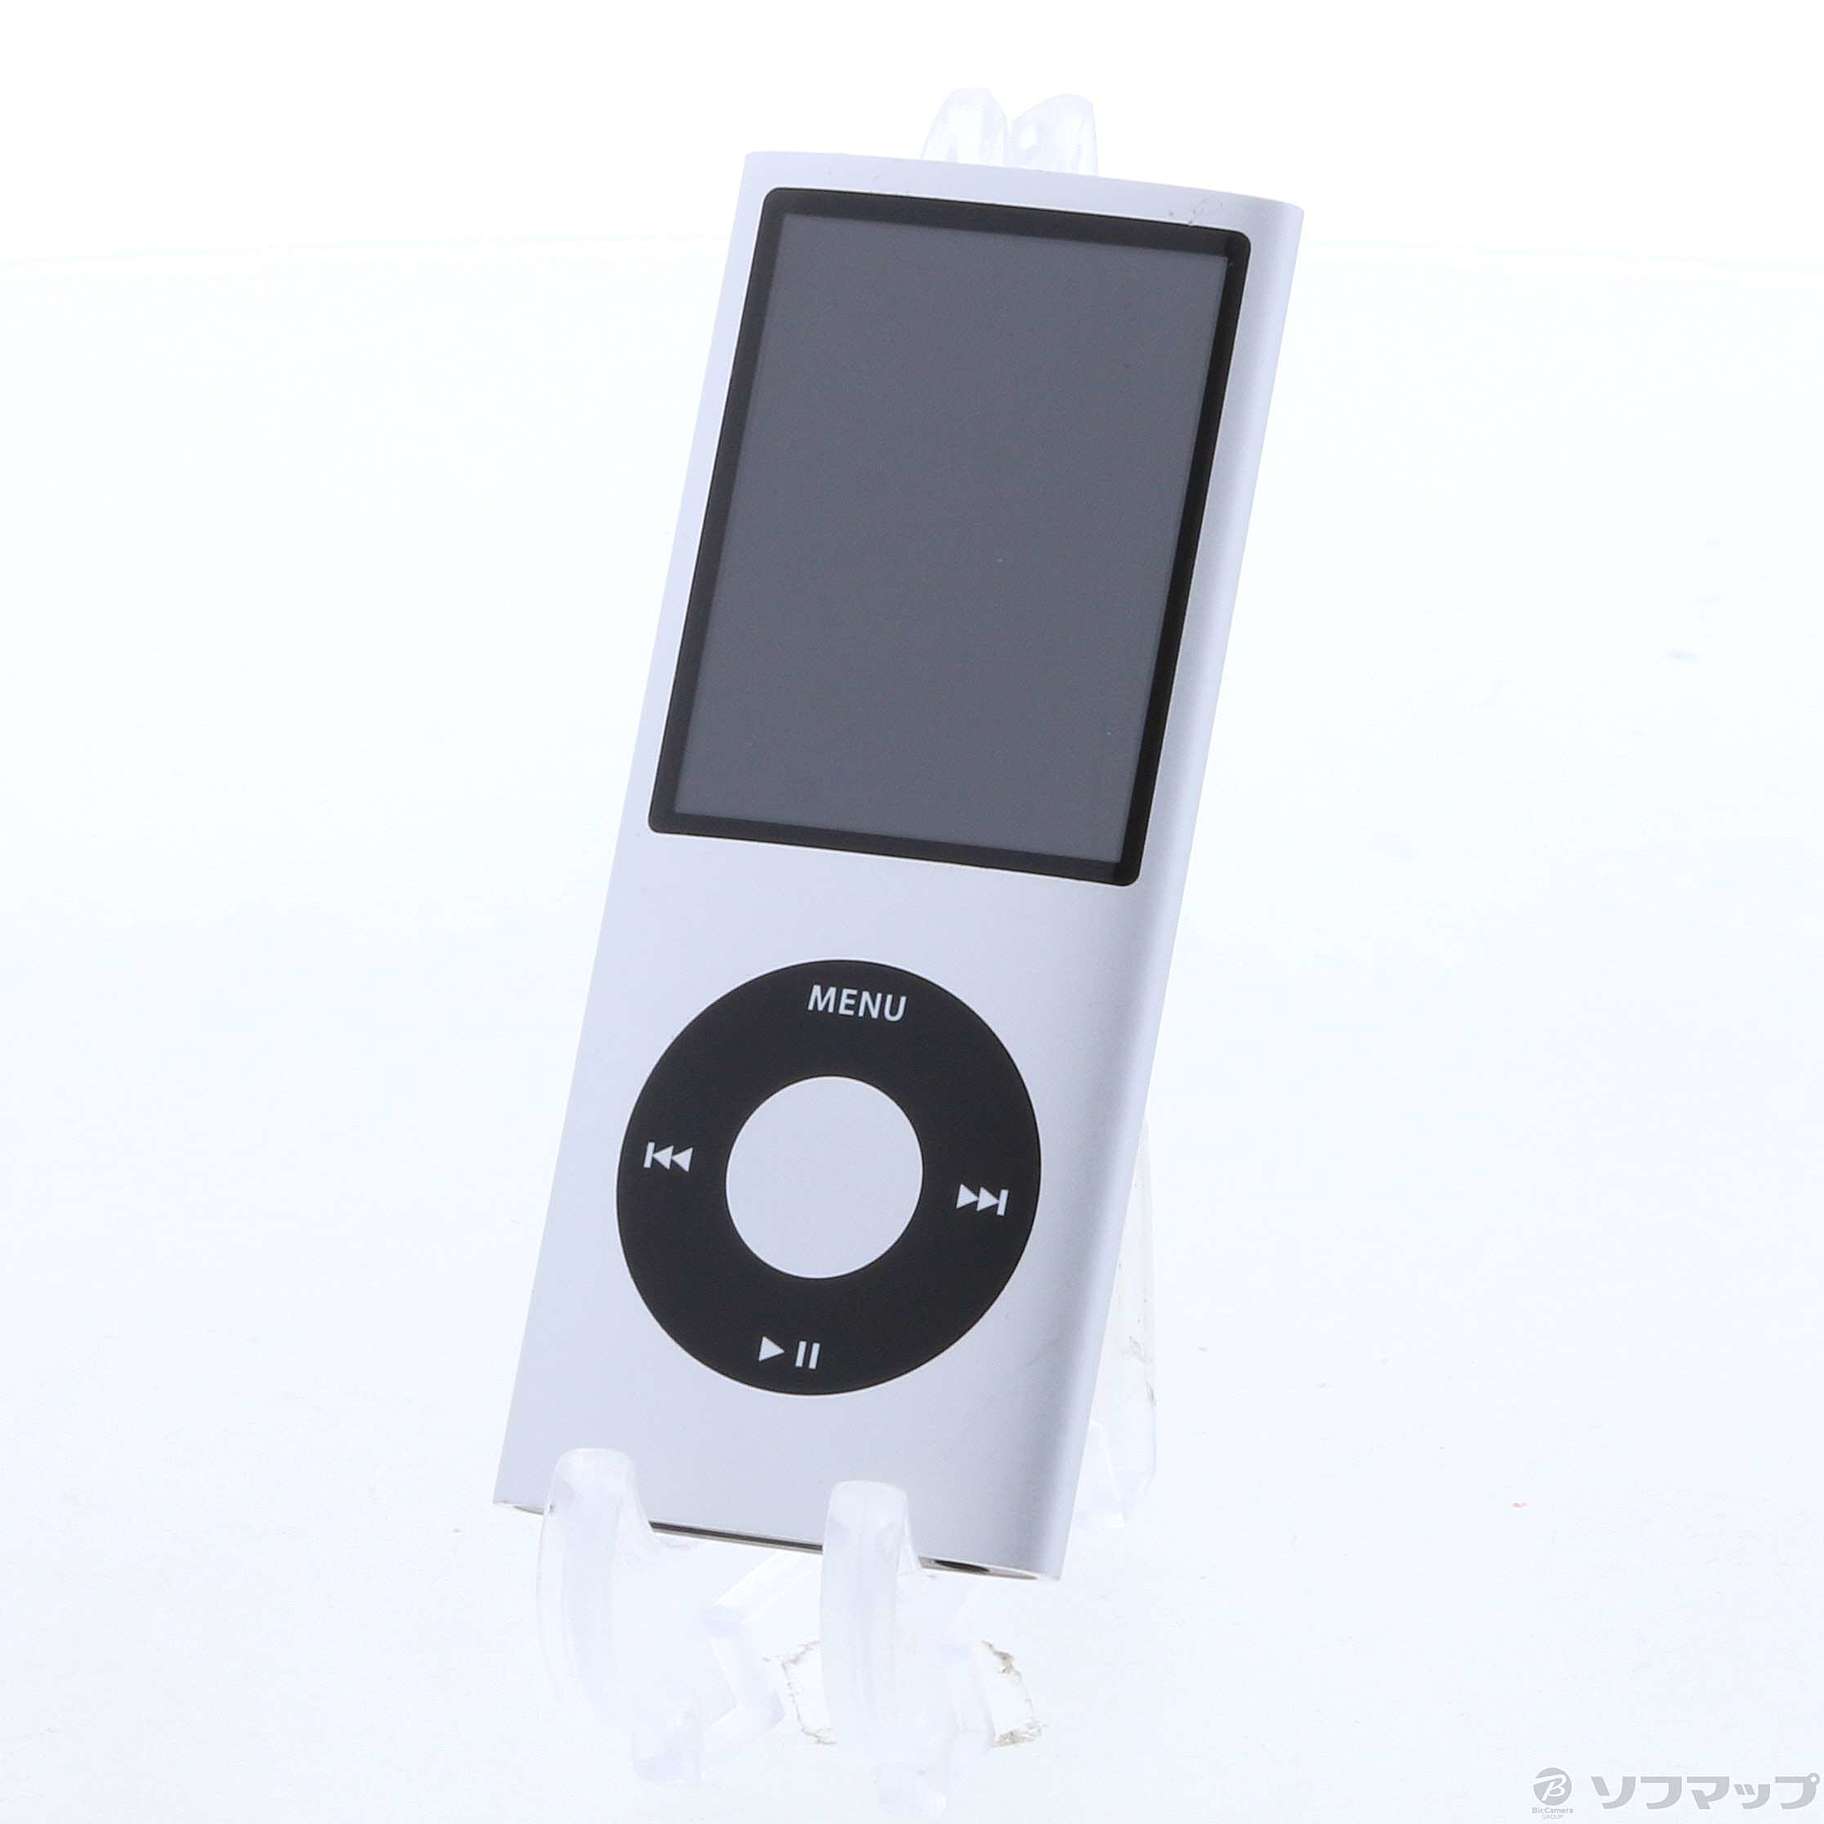 iPod nano 16G MD480JiPod - ポータブルプレーヤー